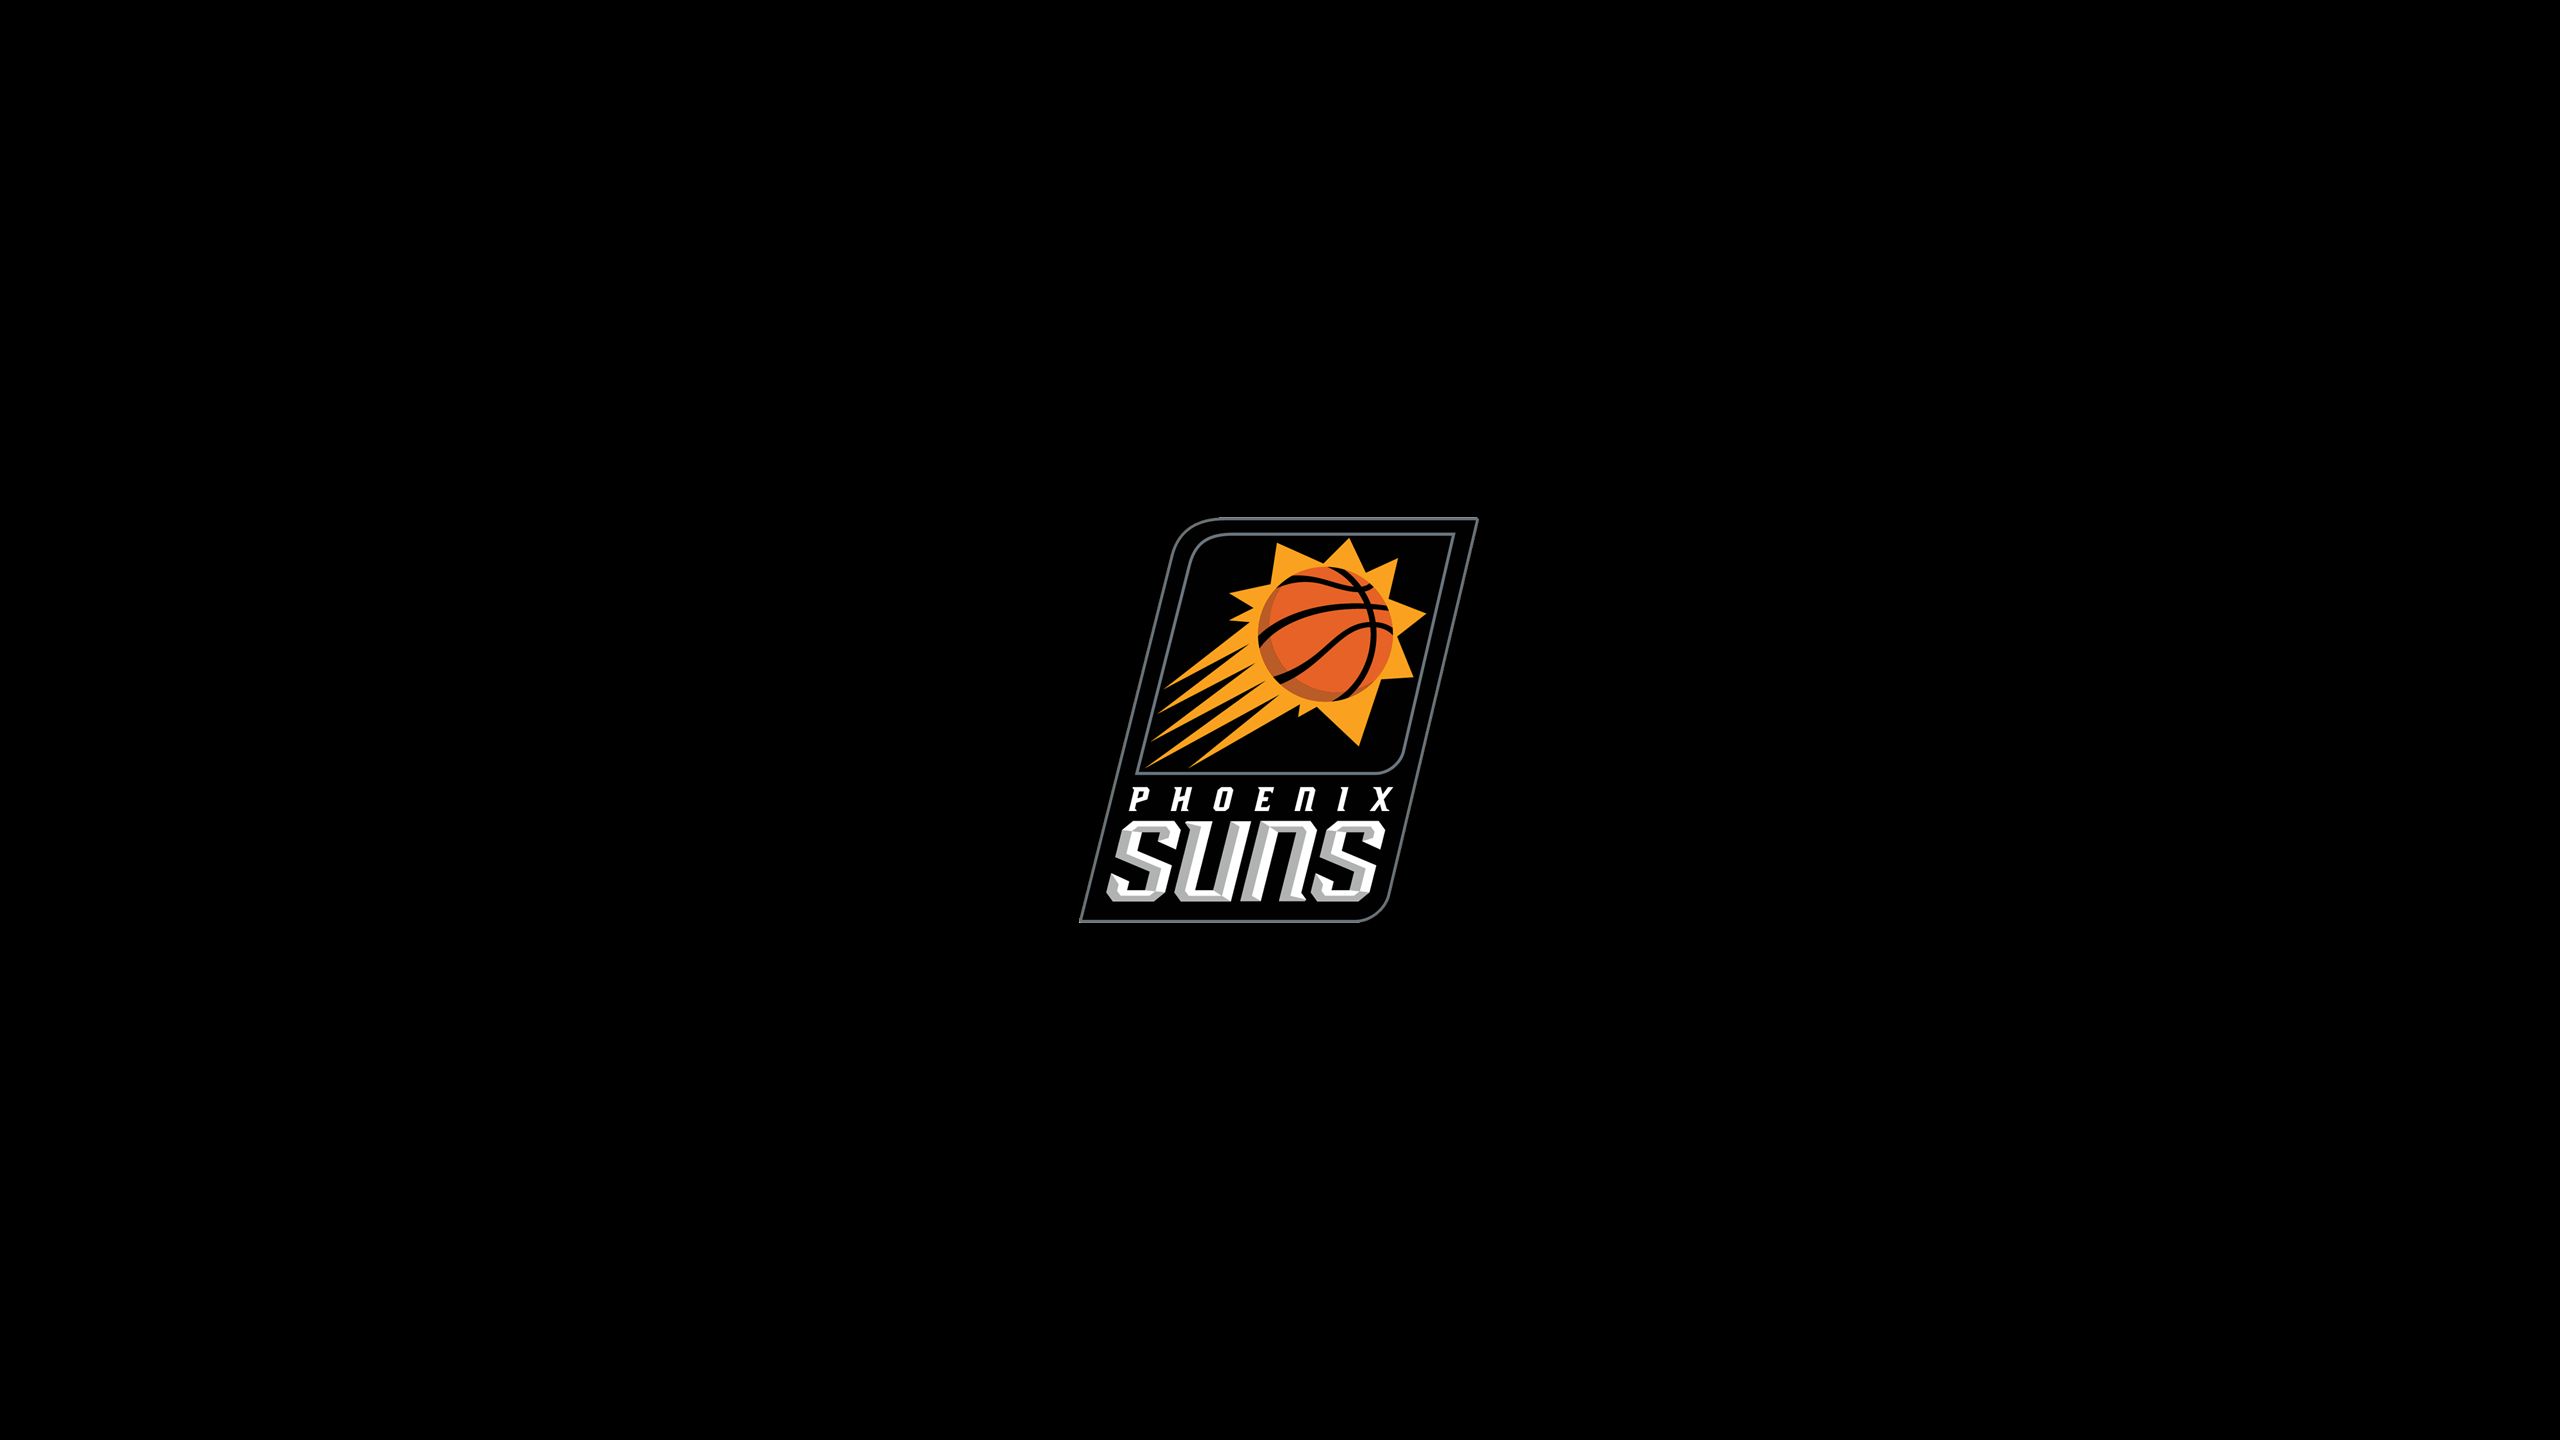 Phoenix Suns 1080P, 2K, 4K, 5K HD wallpapers free download